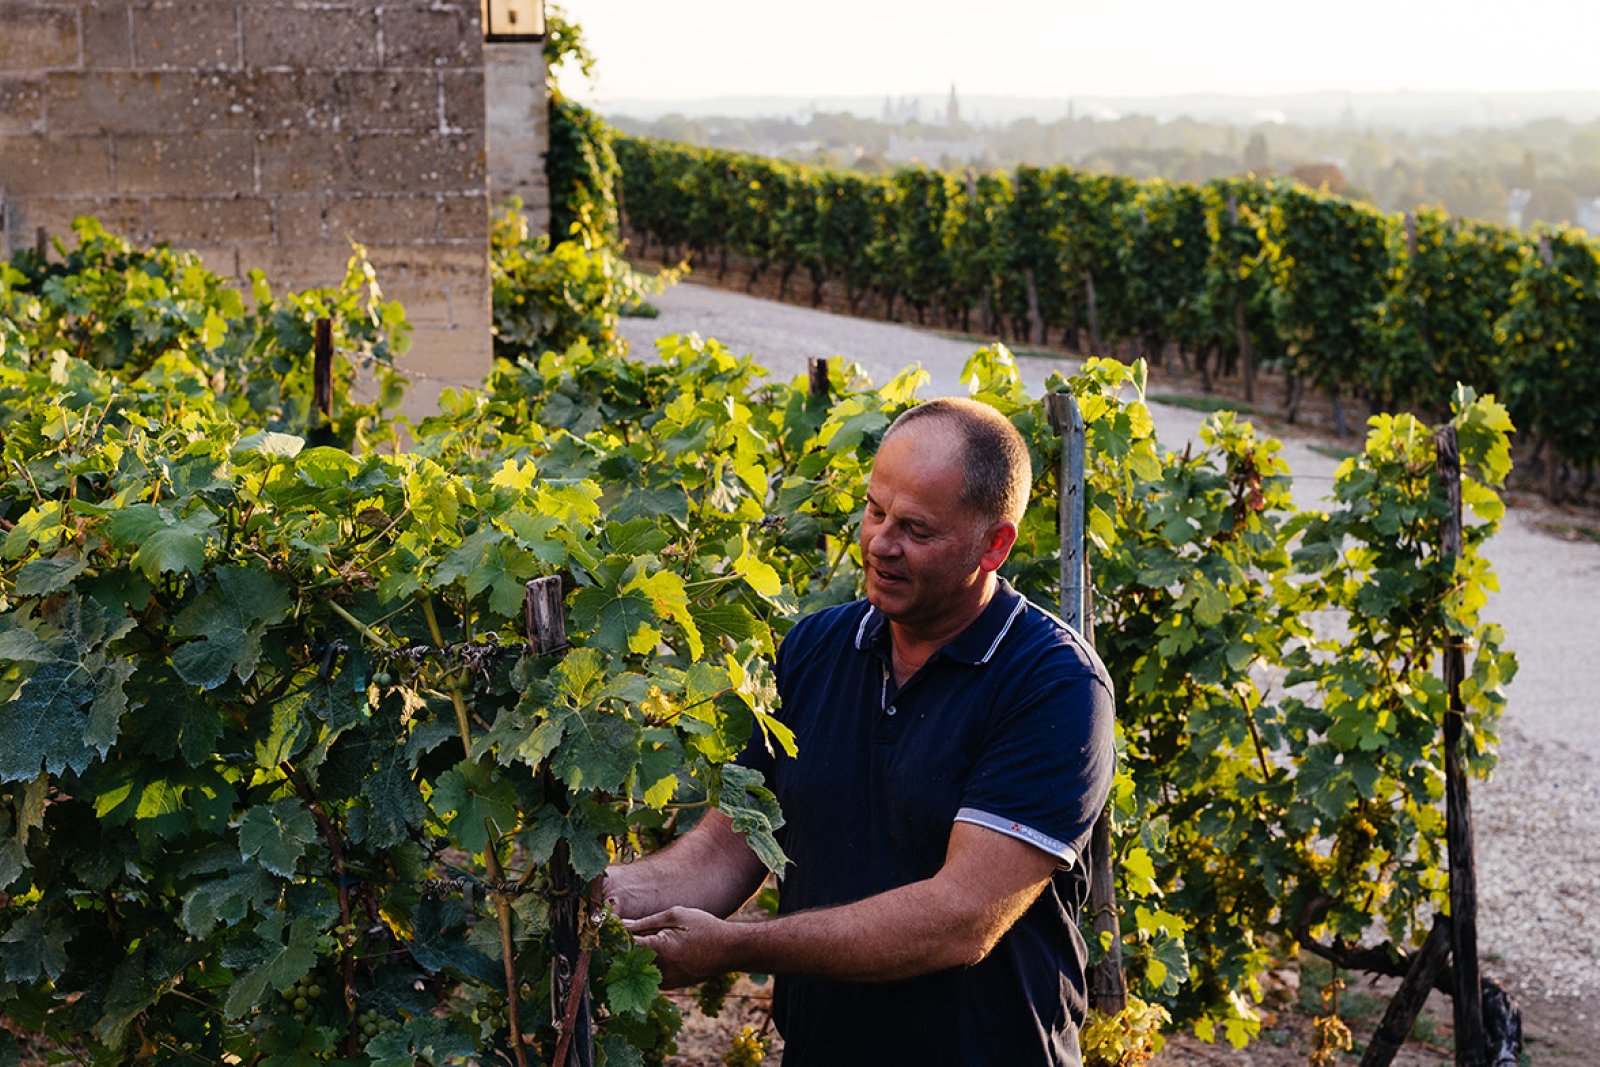 Vineyard Apostelhoeve picking grapes in the Maastricht vineyard